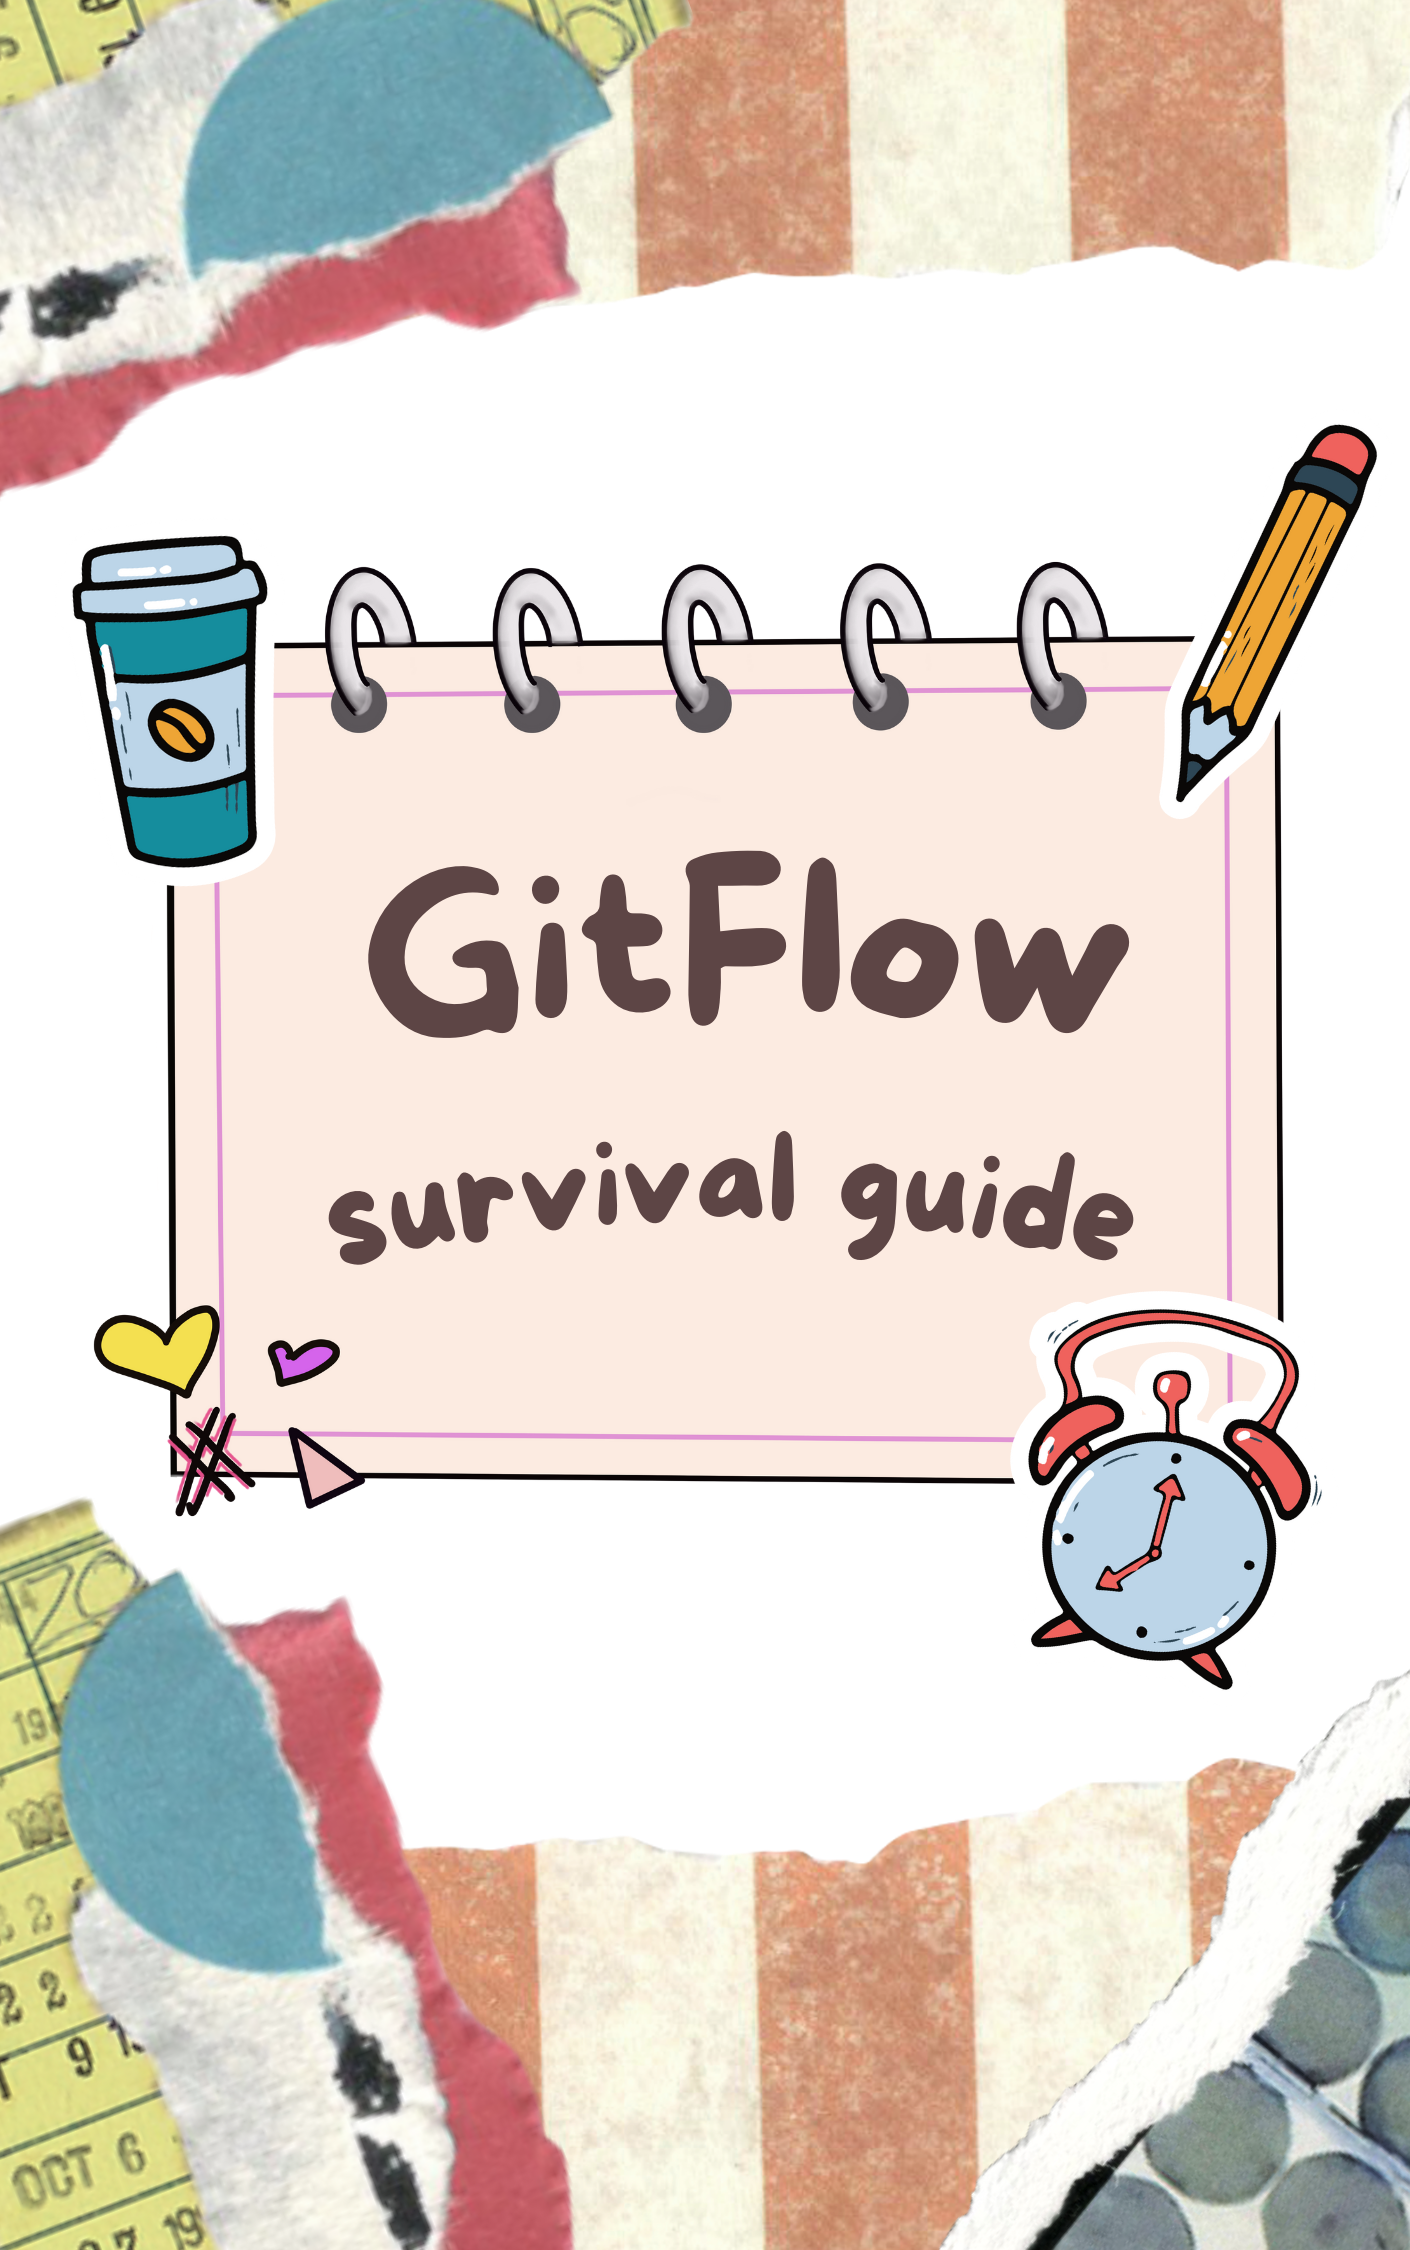 GitFlow - survival guide